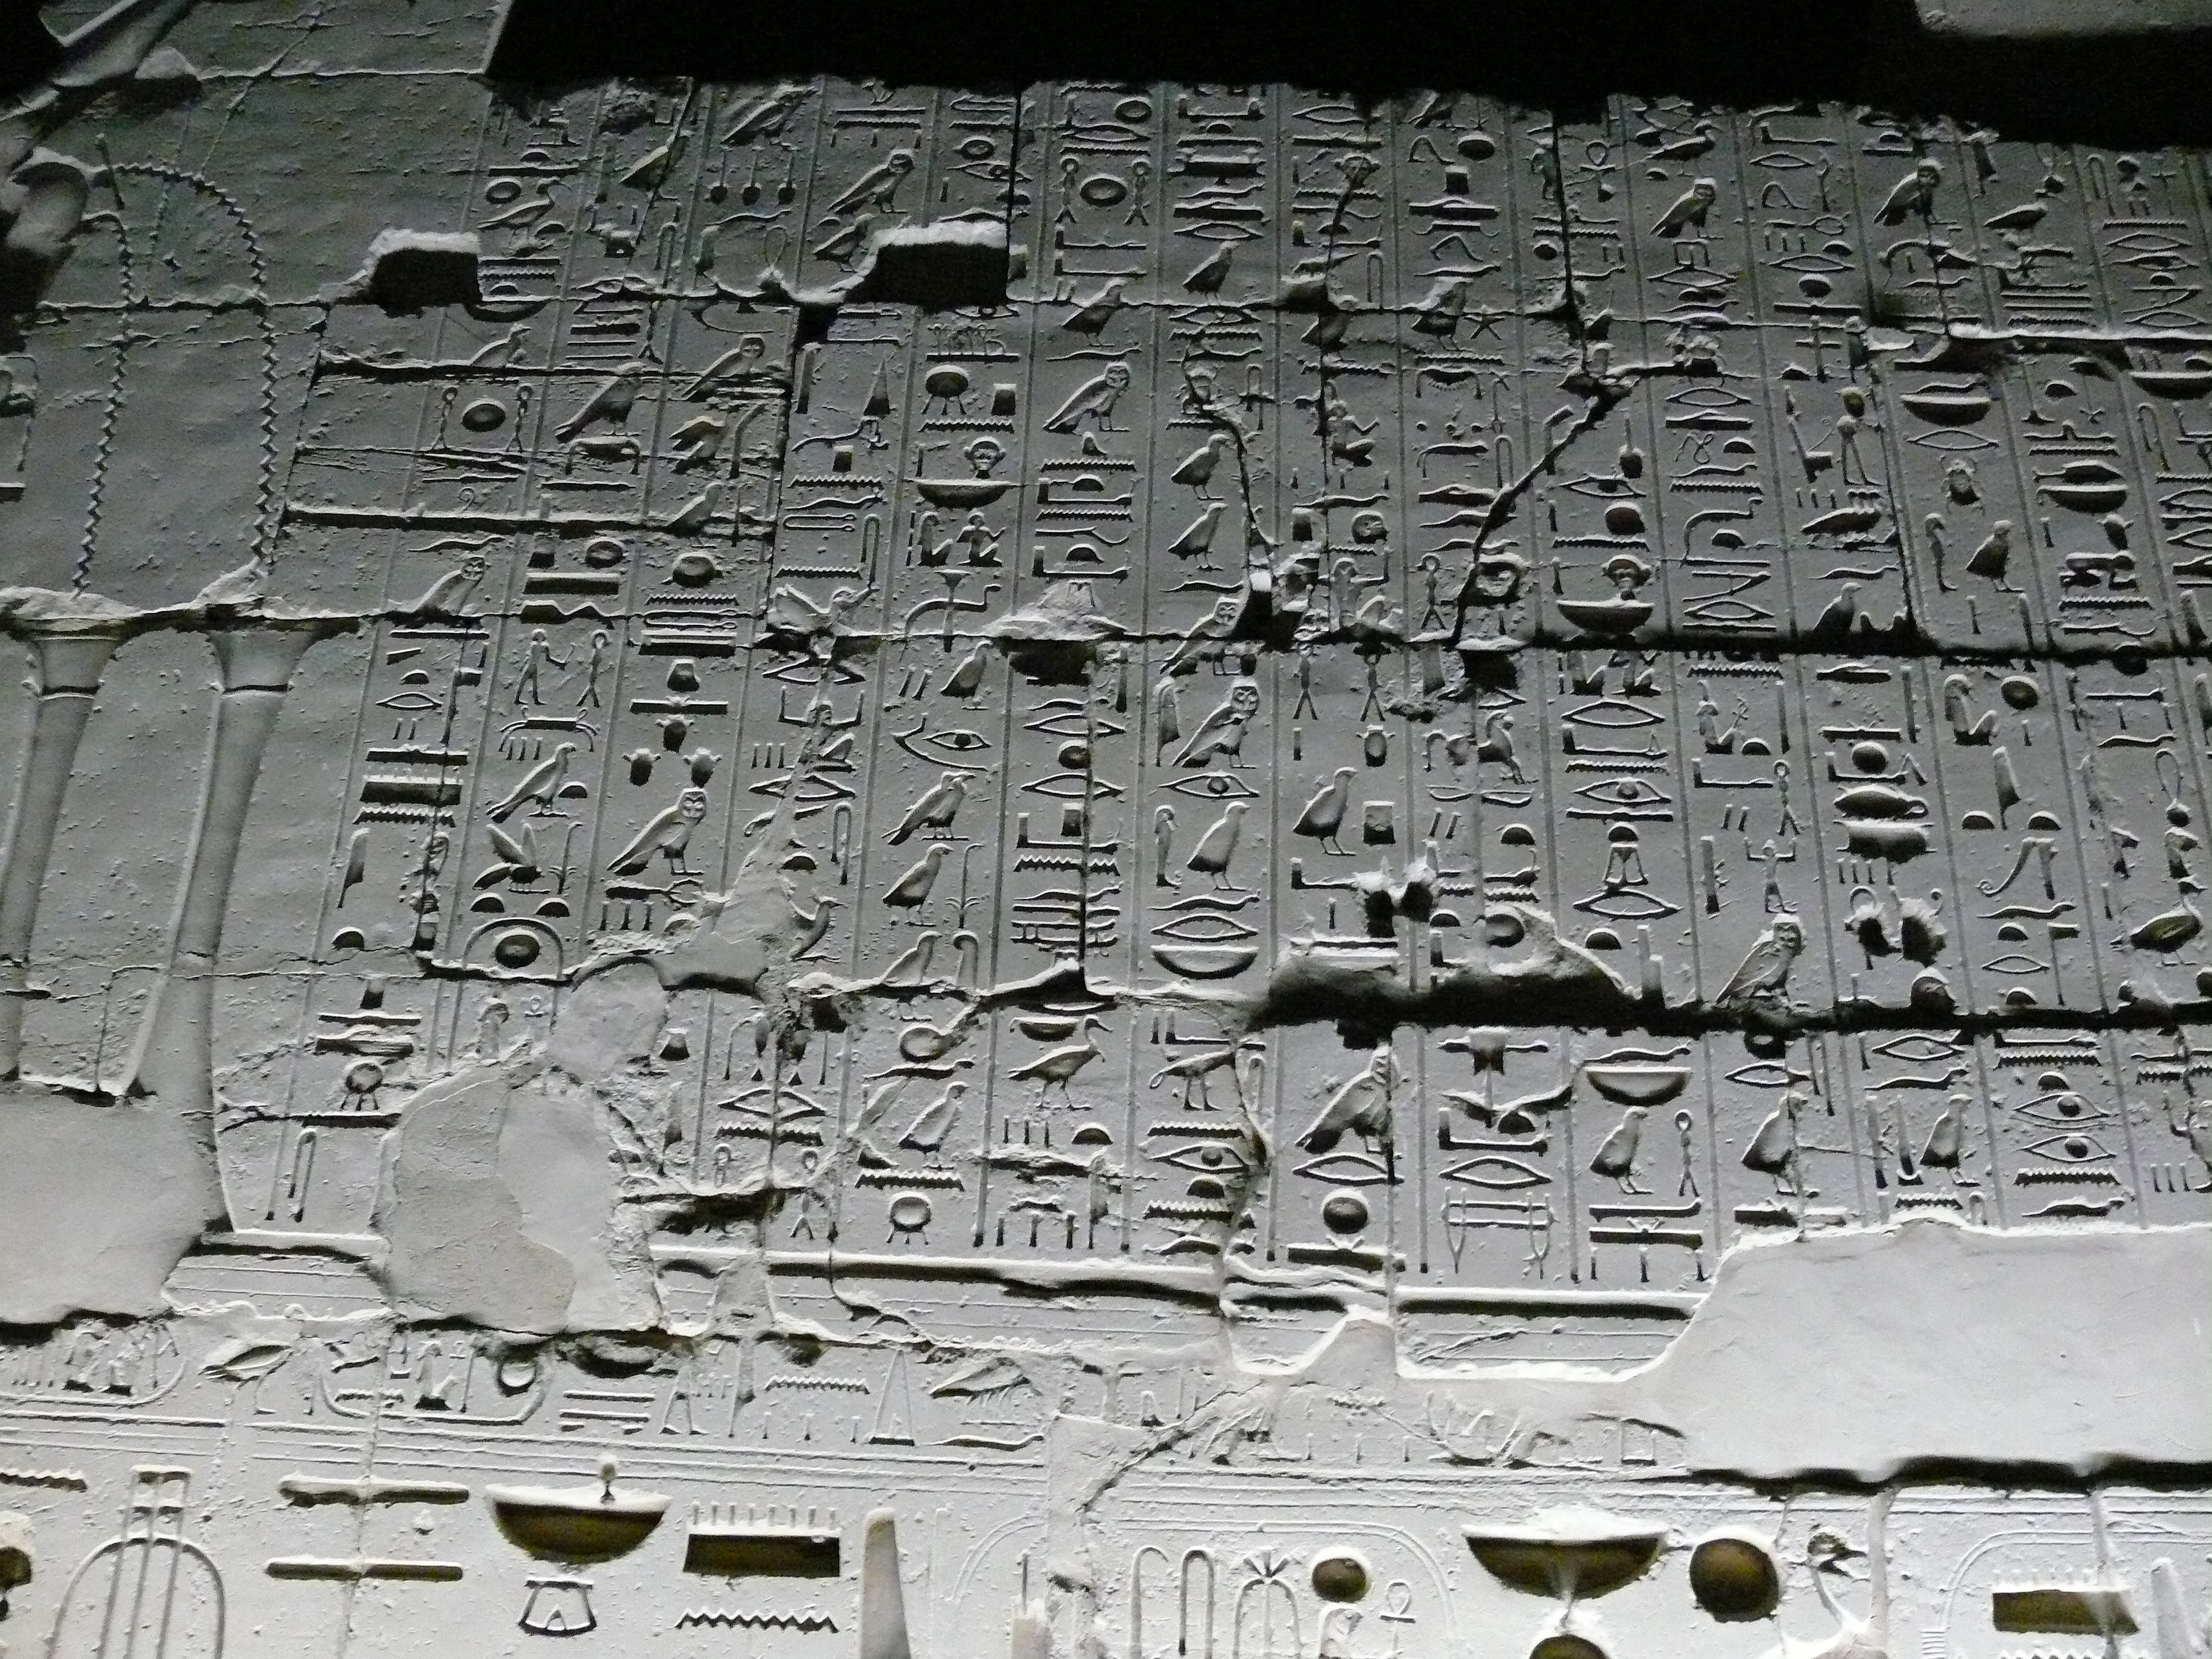 Hieroglyphics 4k Ultra HD Wallpaper